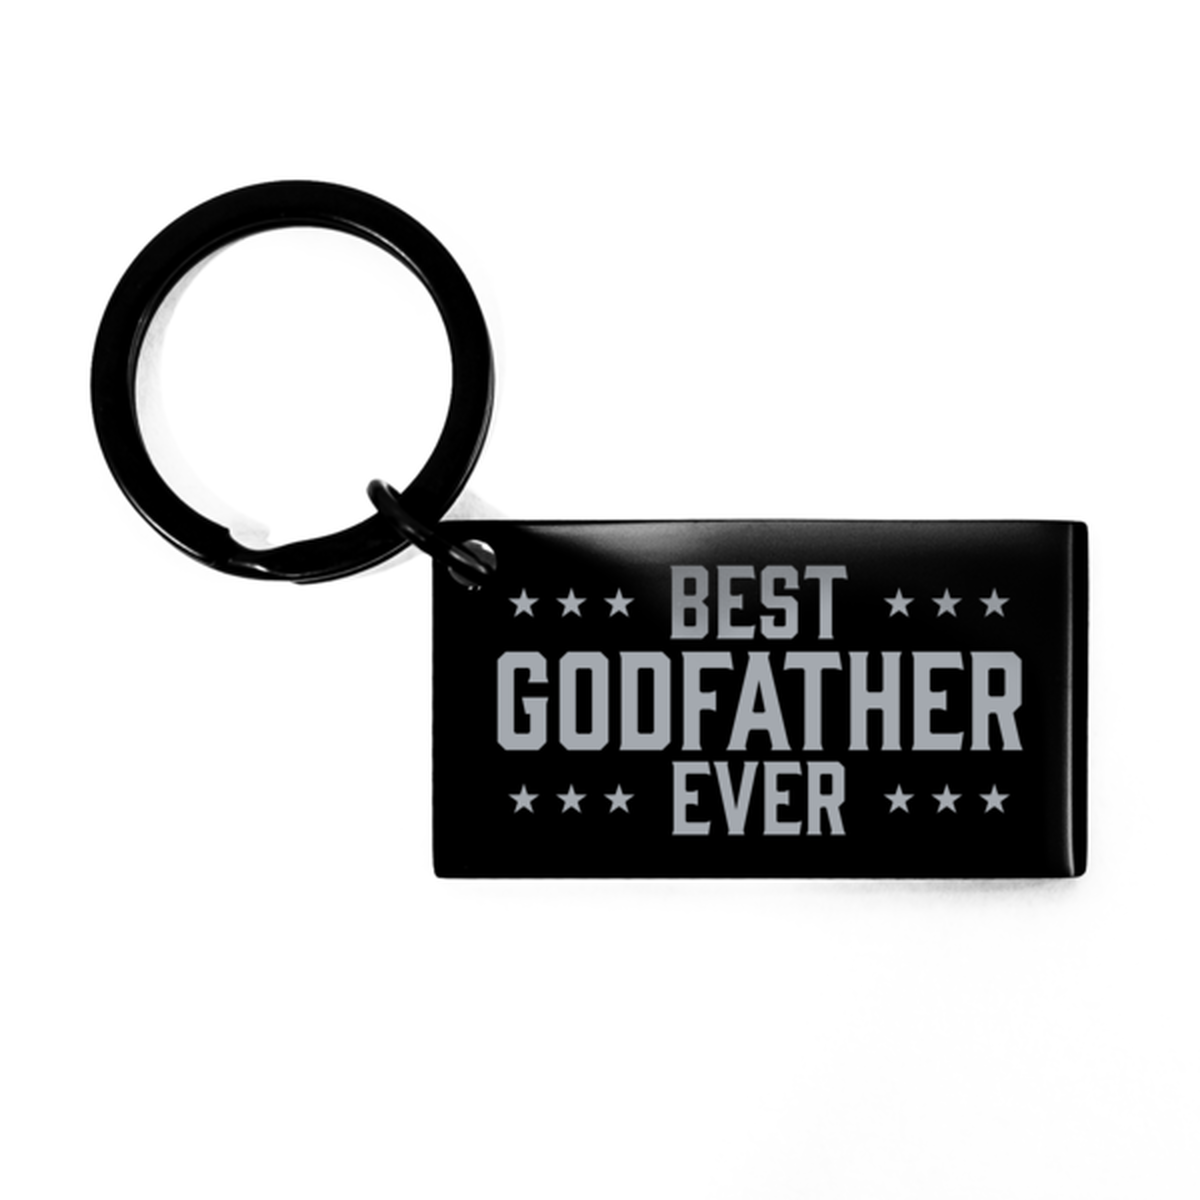 Best Godfather Ever Godfather Gifts, Funny Black Keychain For Godfather, Birthday Engraved Keyring Presents For Men